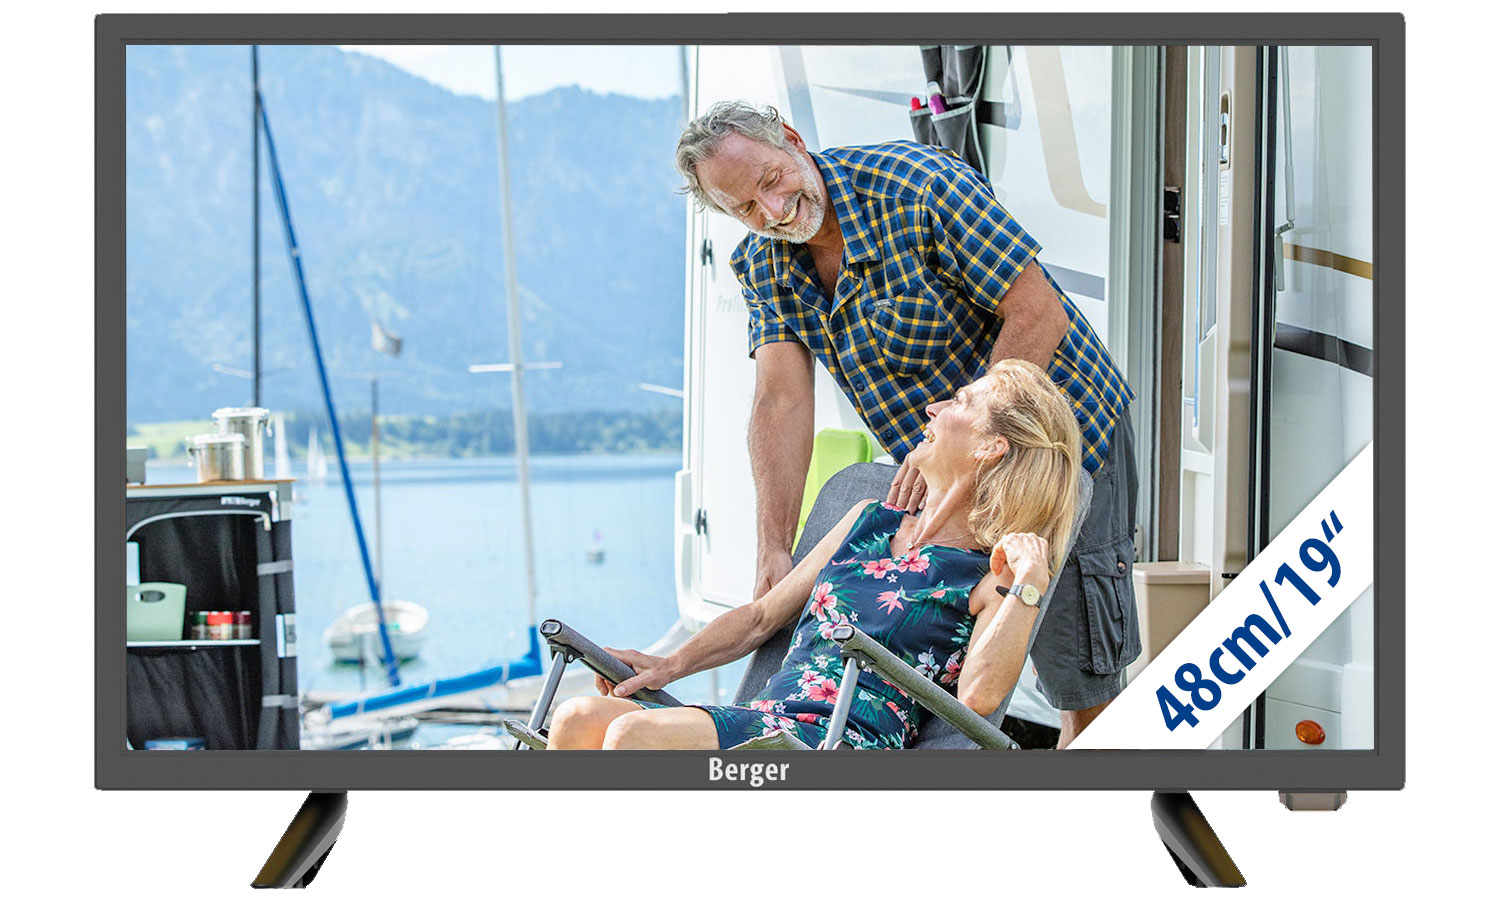 Berger Camping Smart-TV LED Fernseher mit Bluetooth 19 Zoll